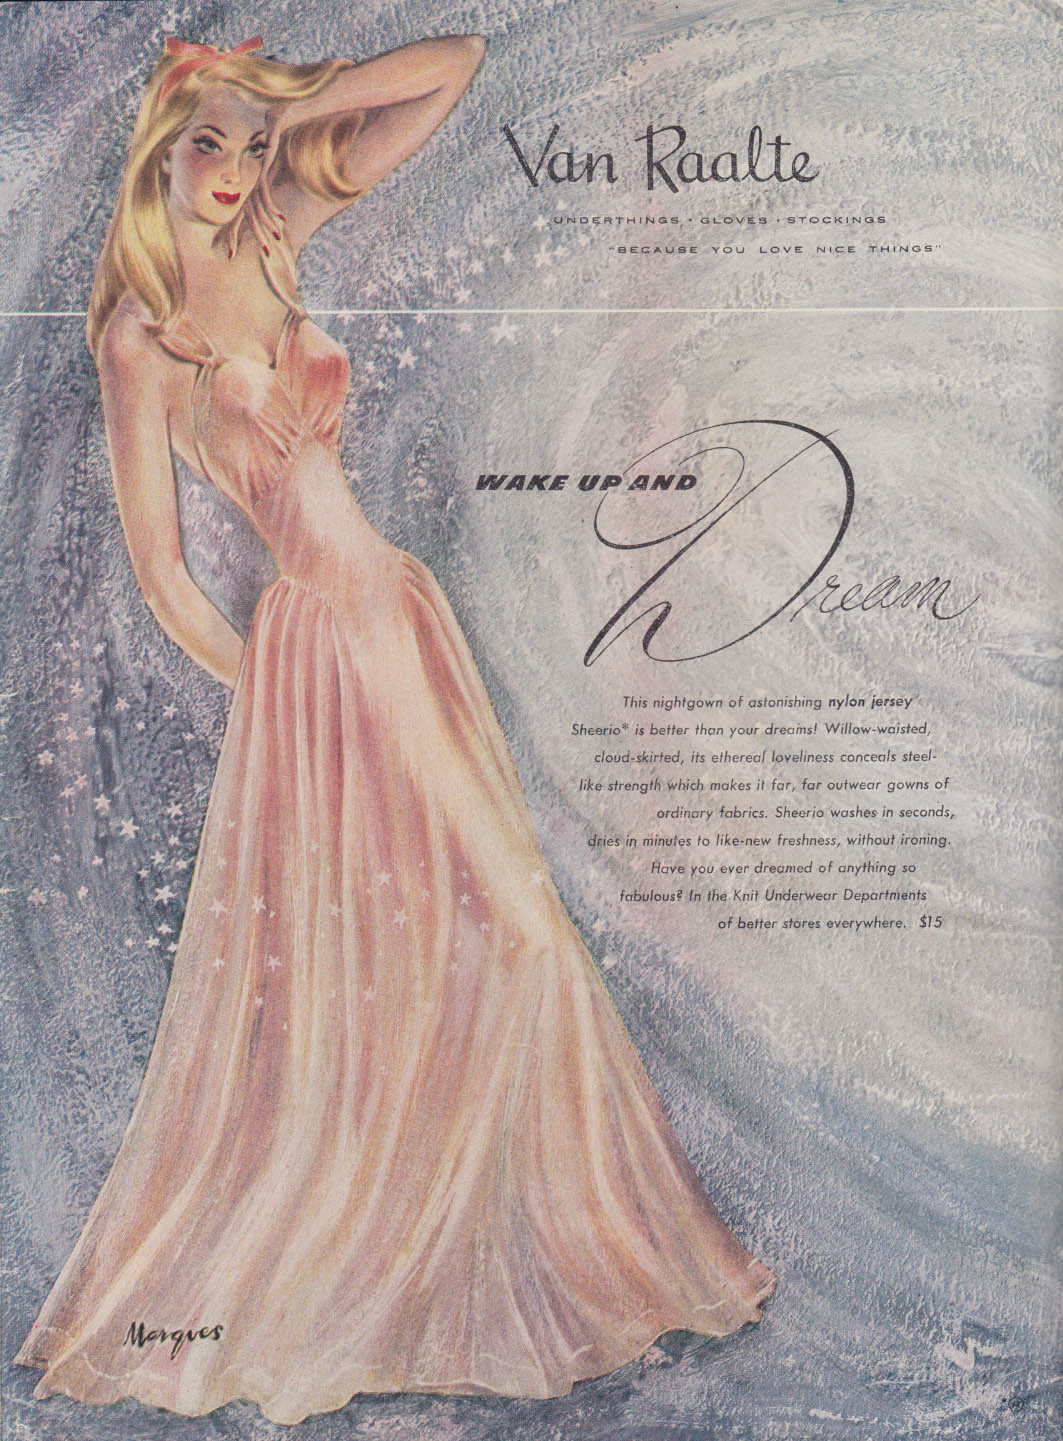 Here's self-service beauty Warner's Bra ad 1956 GH